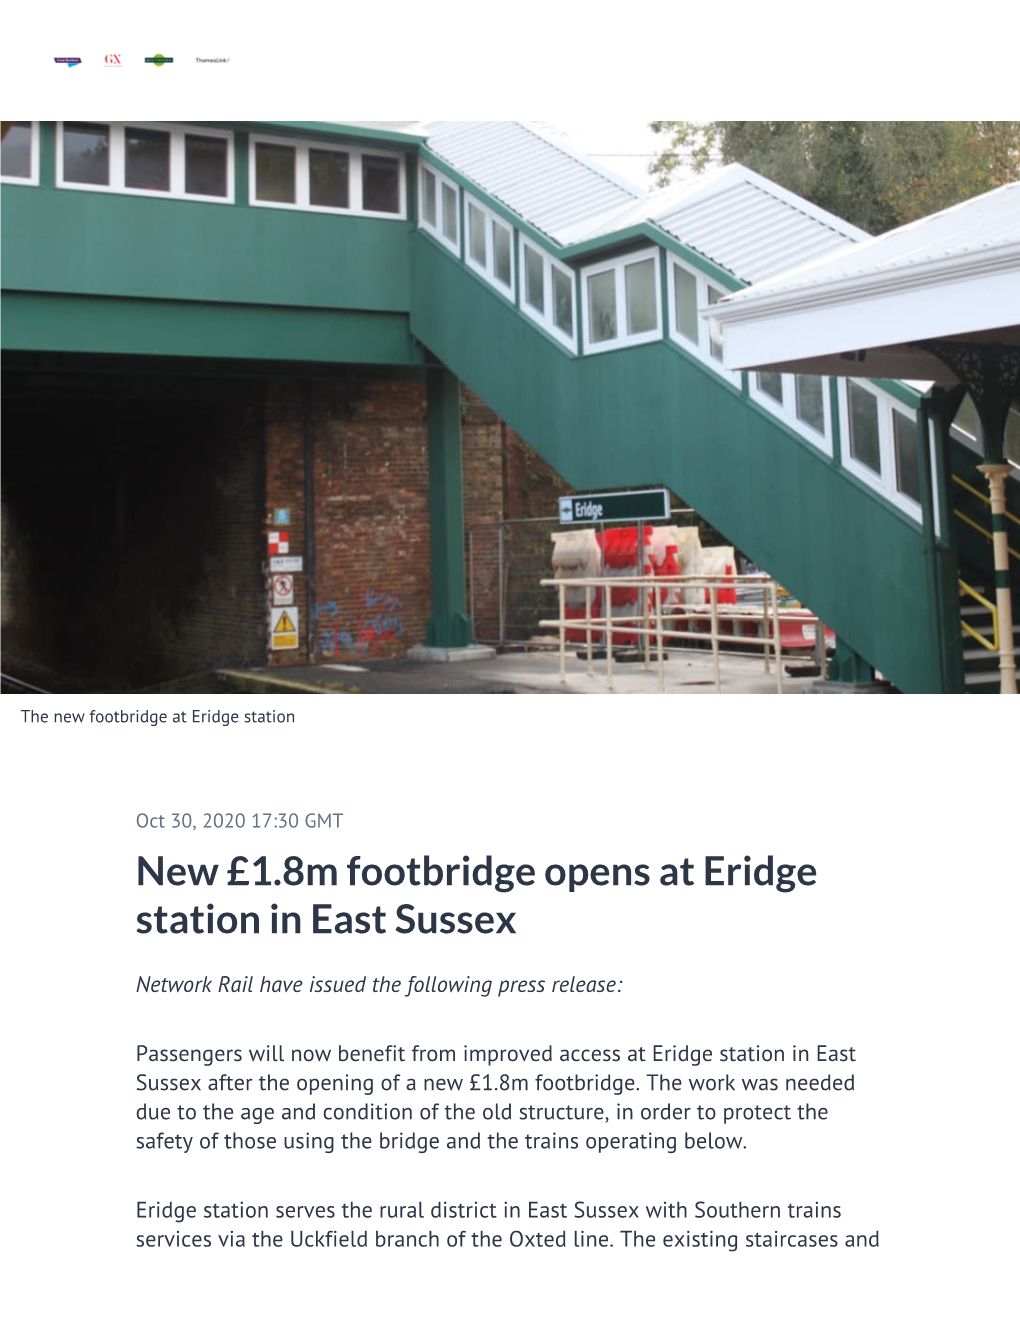 New £1.8M Footbridge Opens at Eridge Station in East Sussex